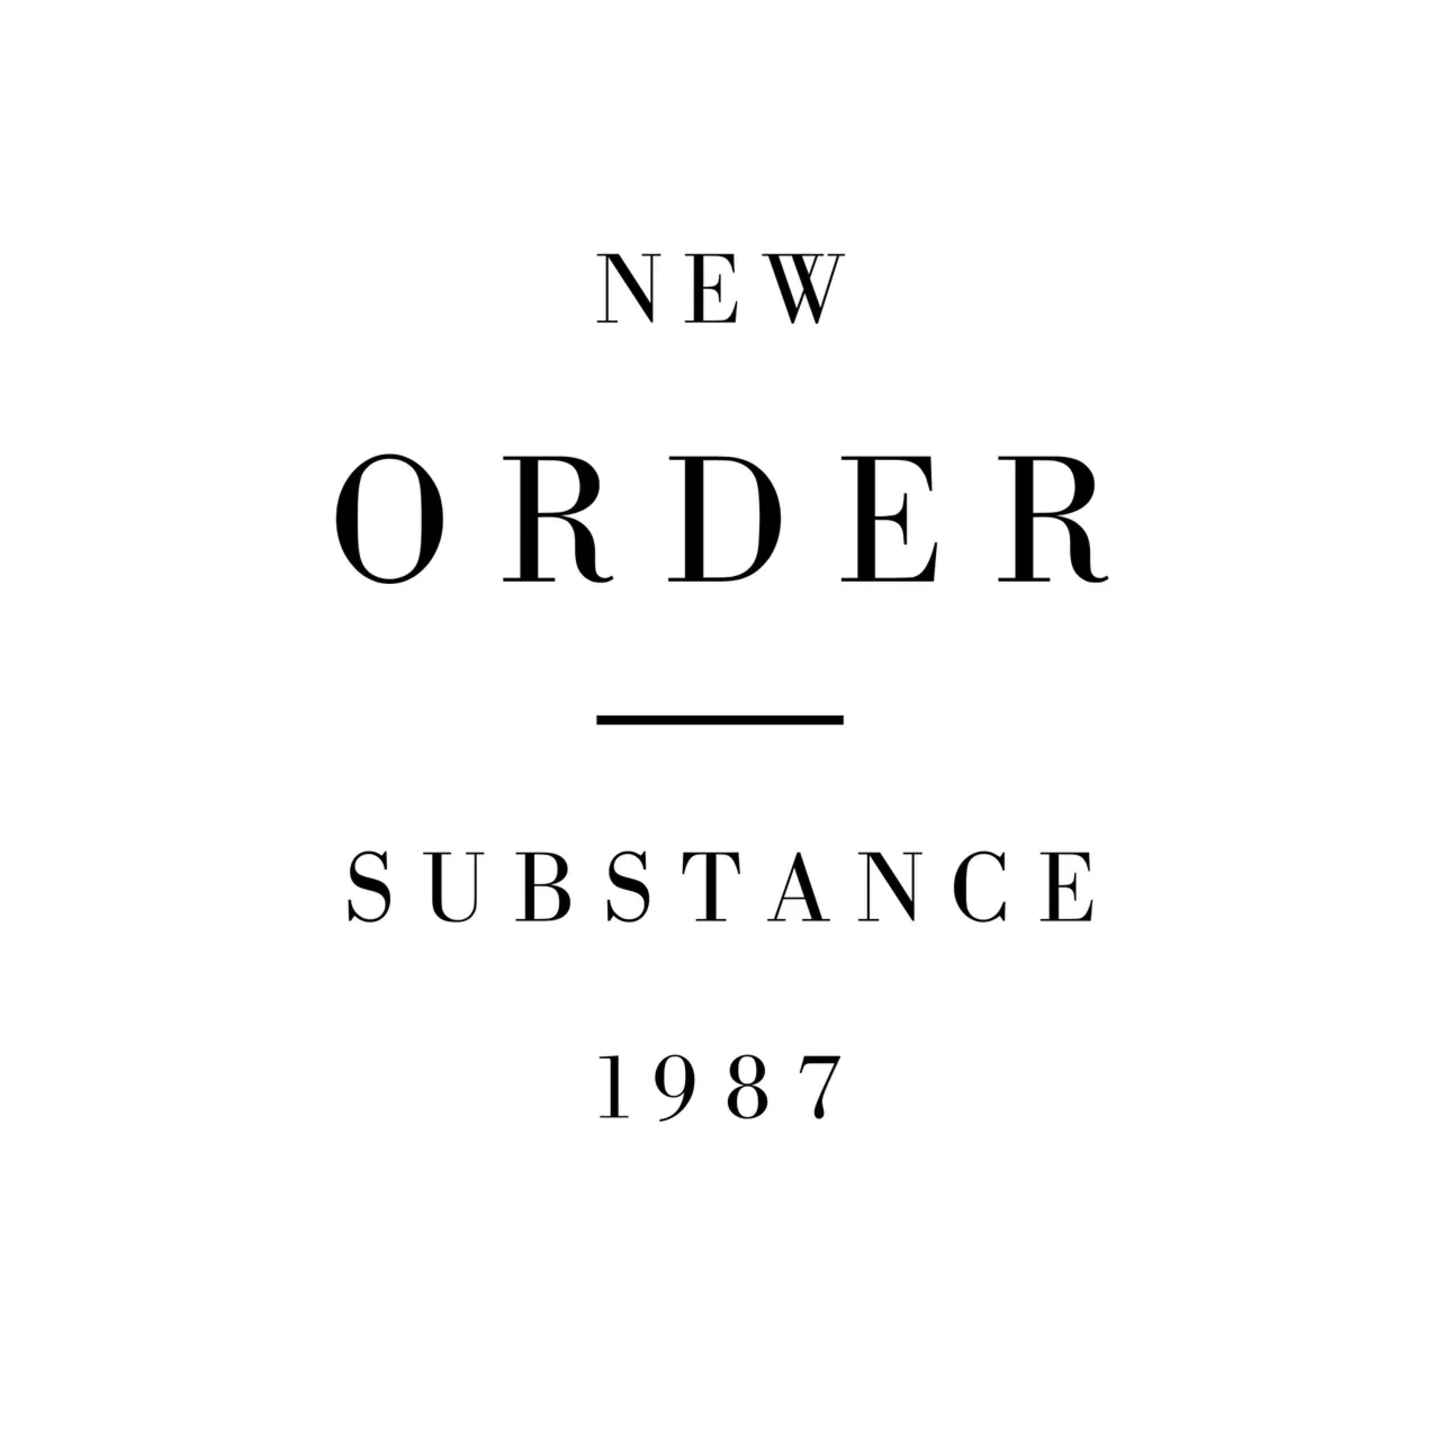 NEW ORDER - Substance 1987 2xLP Remastered